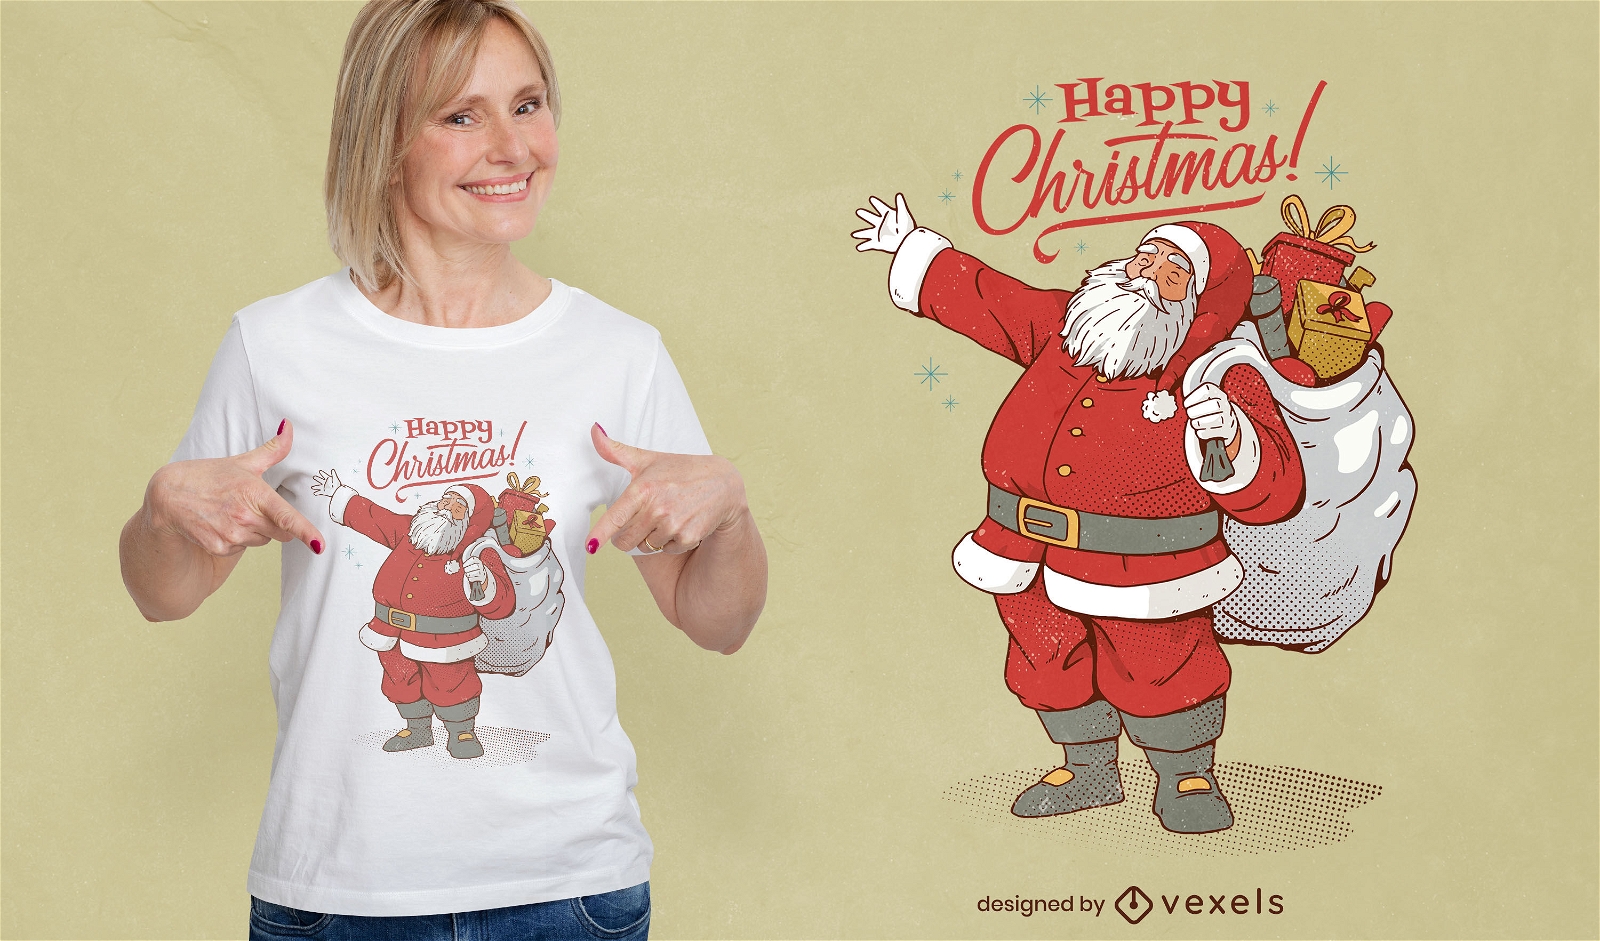 Happy Christmas santa t-shirt design